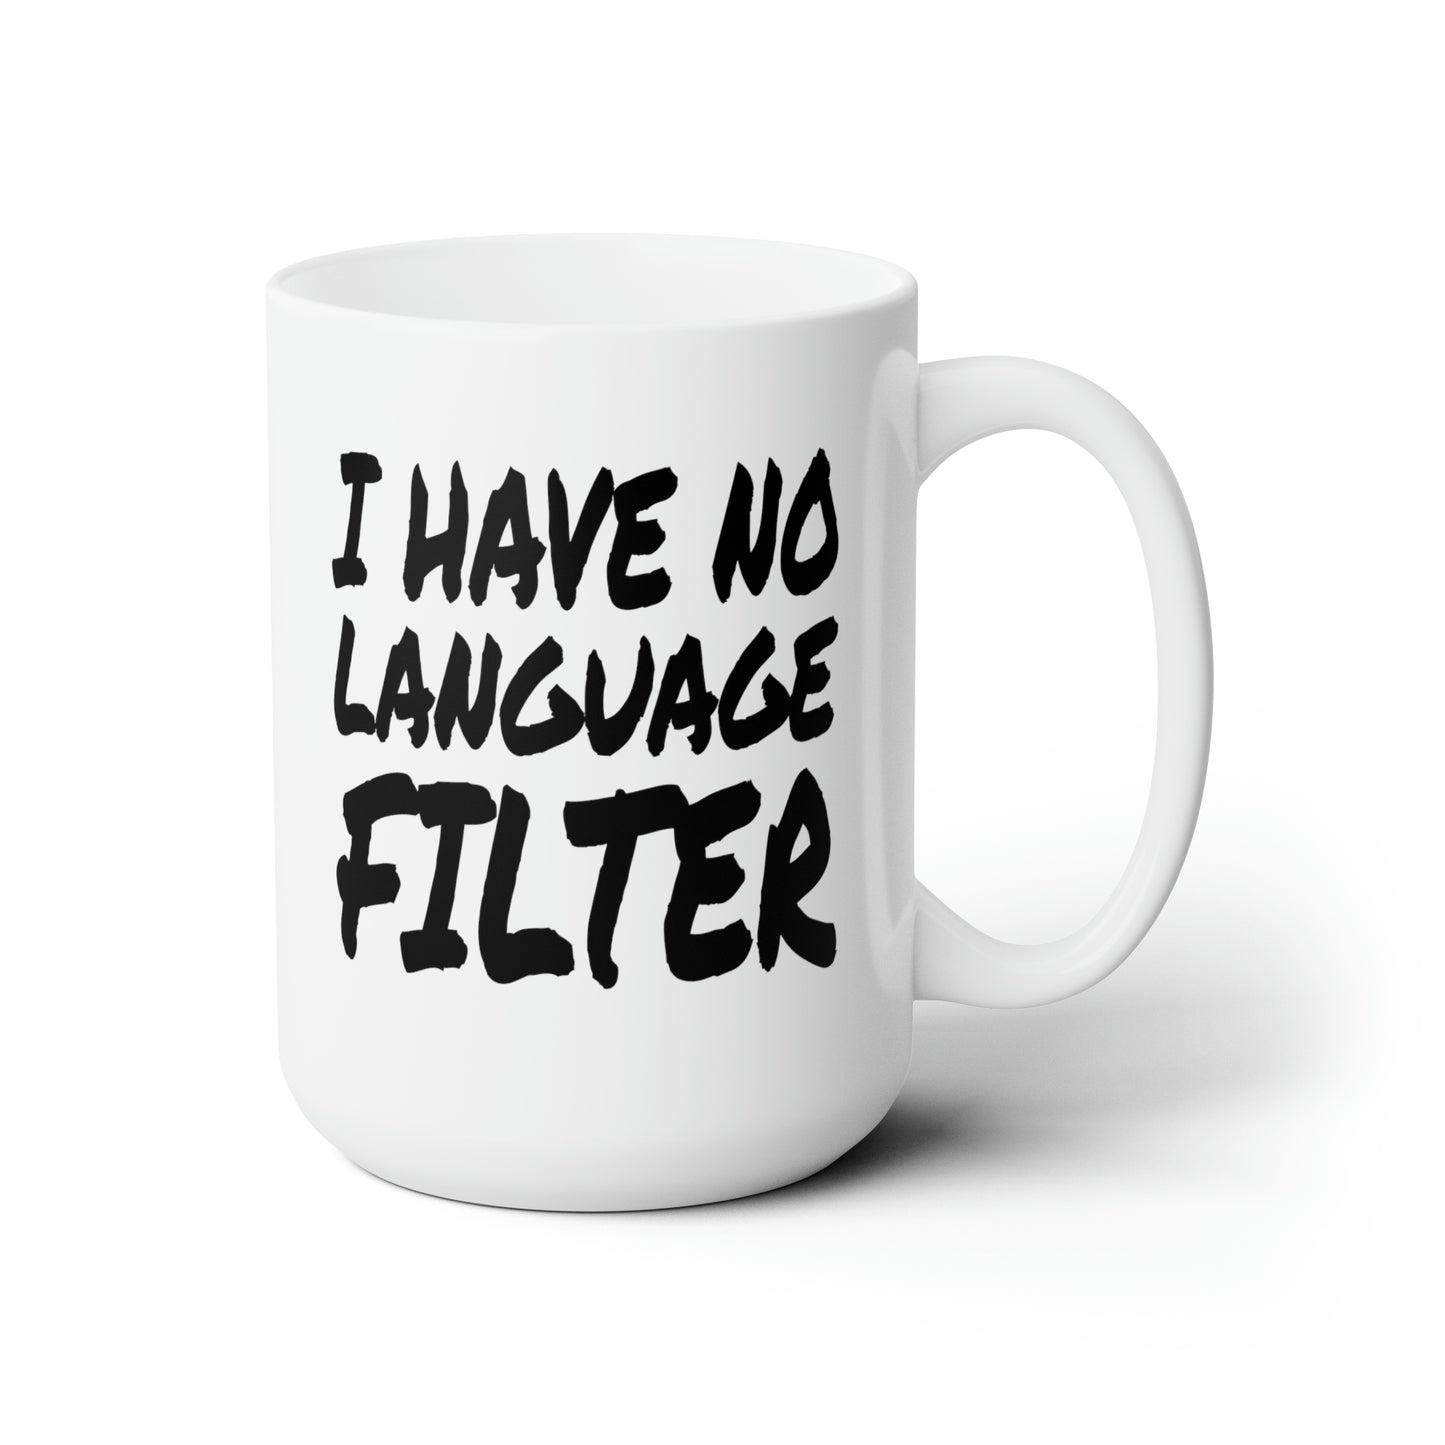 I Have no Language Filter - Coffee Mug